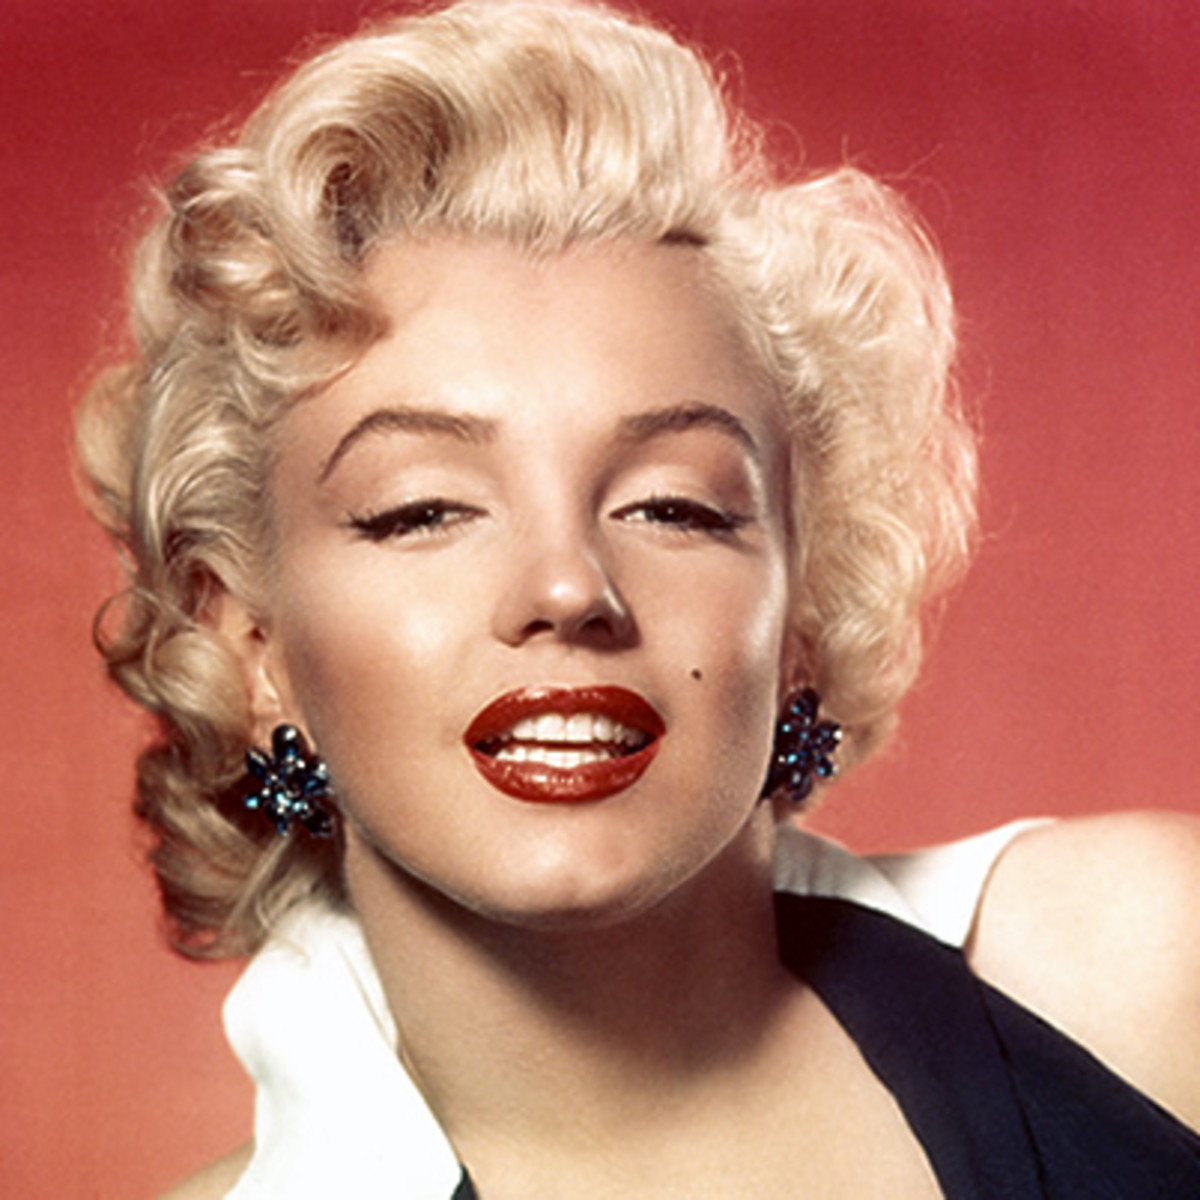 Marilyn Monroe Film Actress Film Actor Film Actress Classic Pin Ups Biography 1